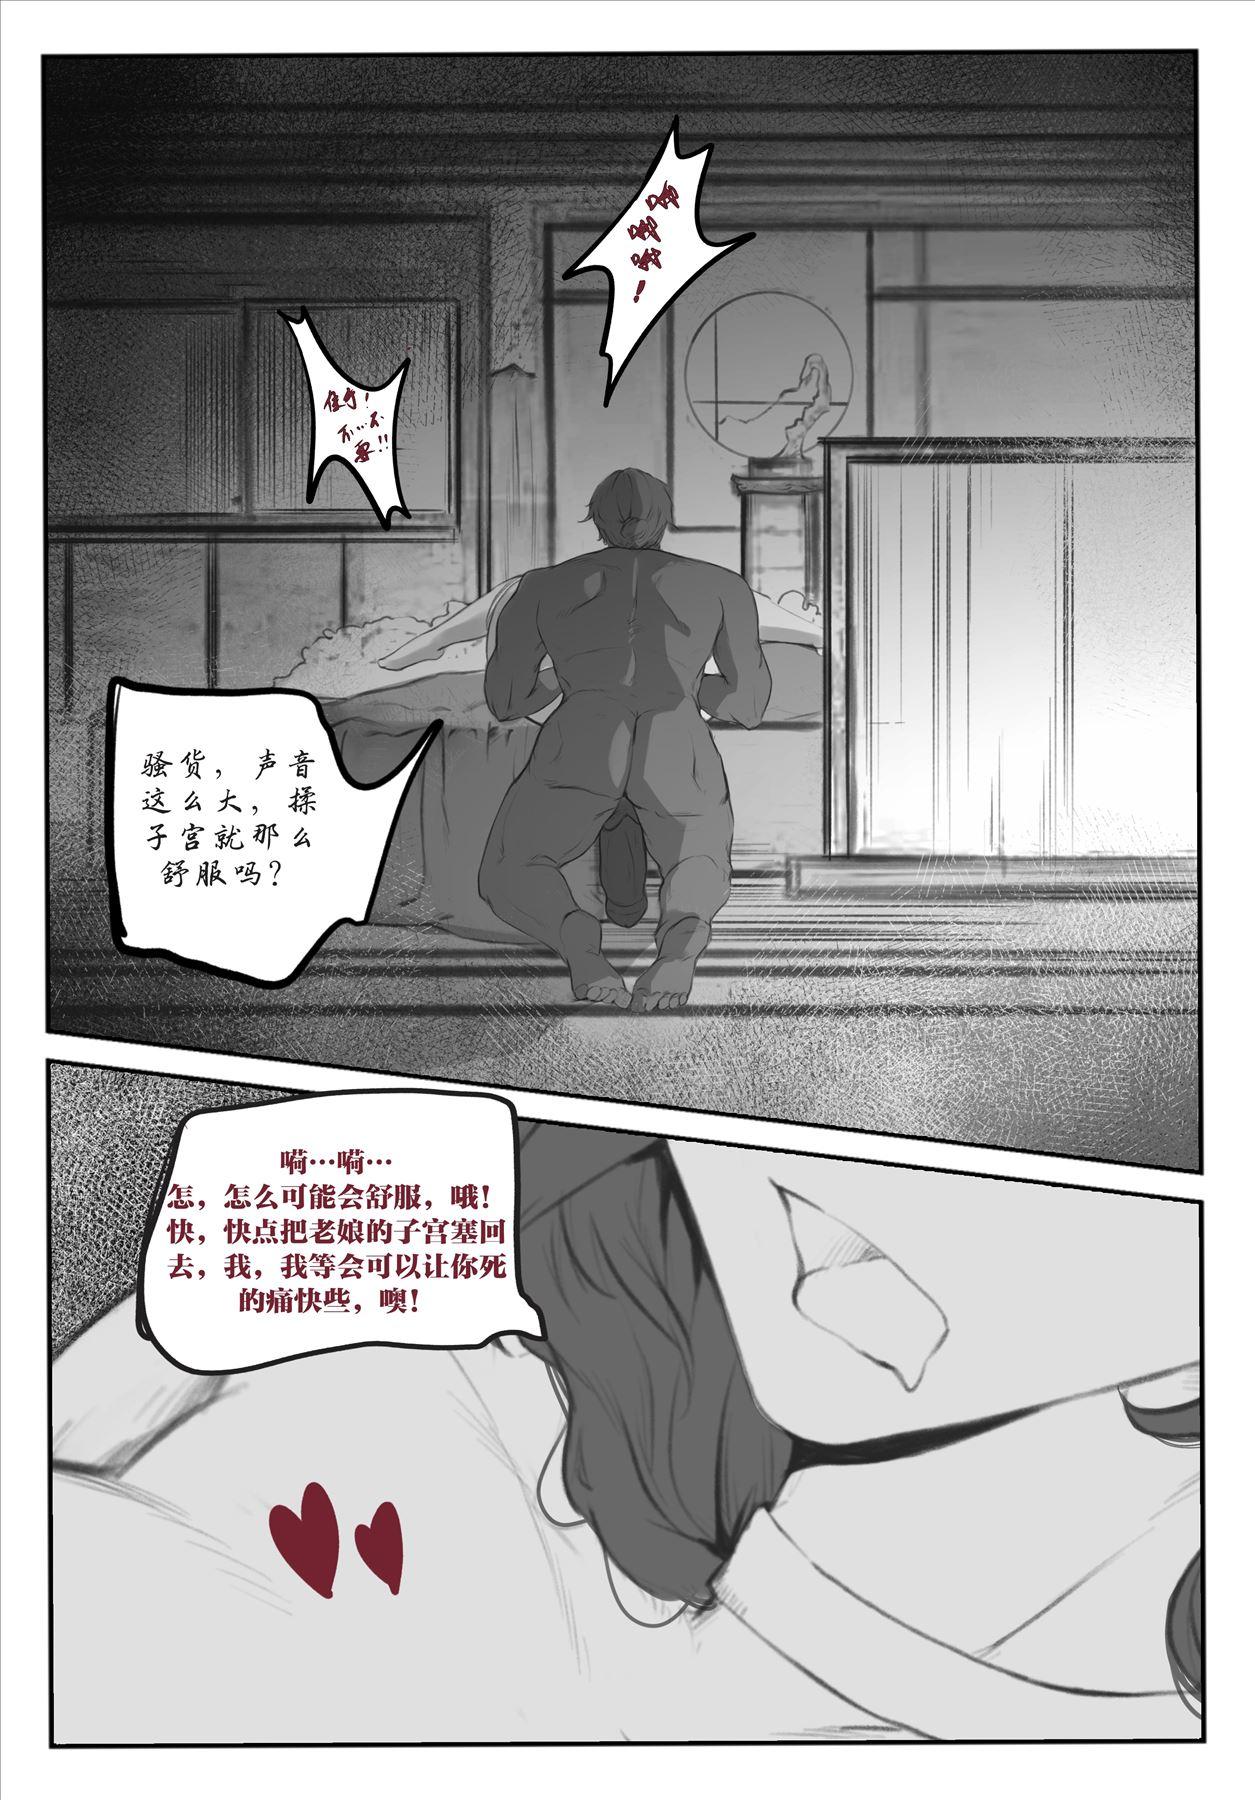 Fist 碧染2夜篇 - Original Screaming - Page 3